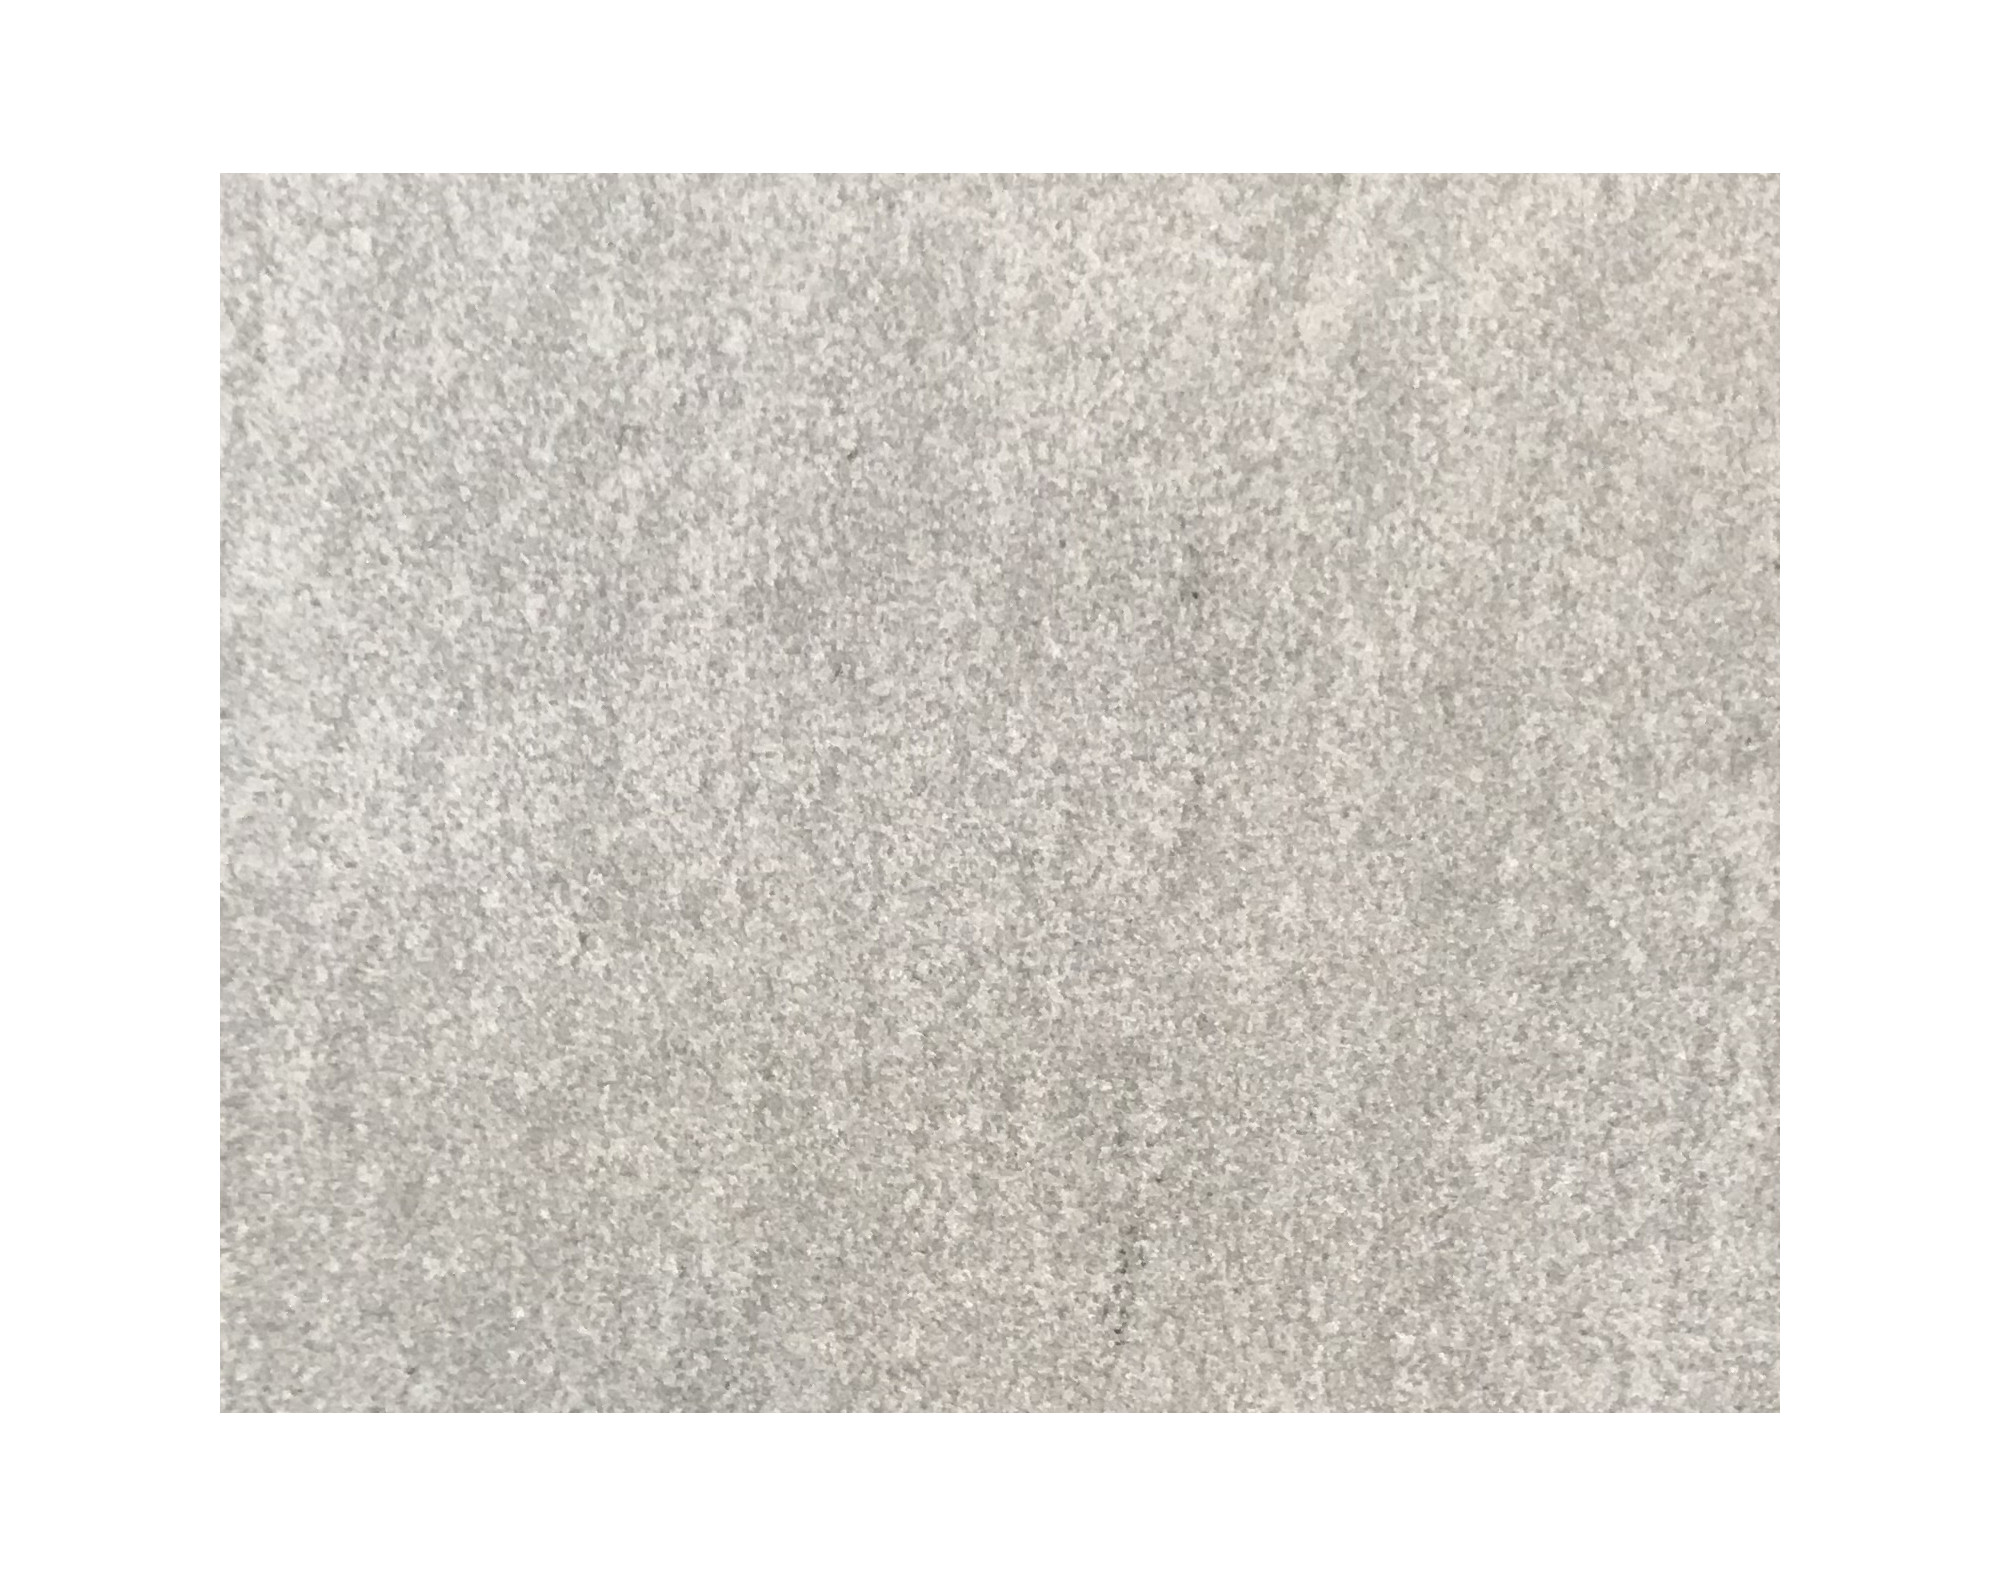 Harmo roc firenzeset, keramiek-serie, rond d:4,20m, zand grijs, keramisch porselein